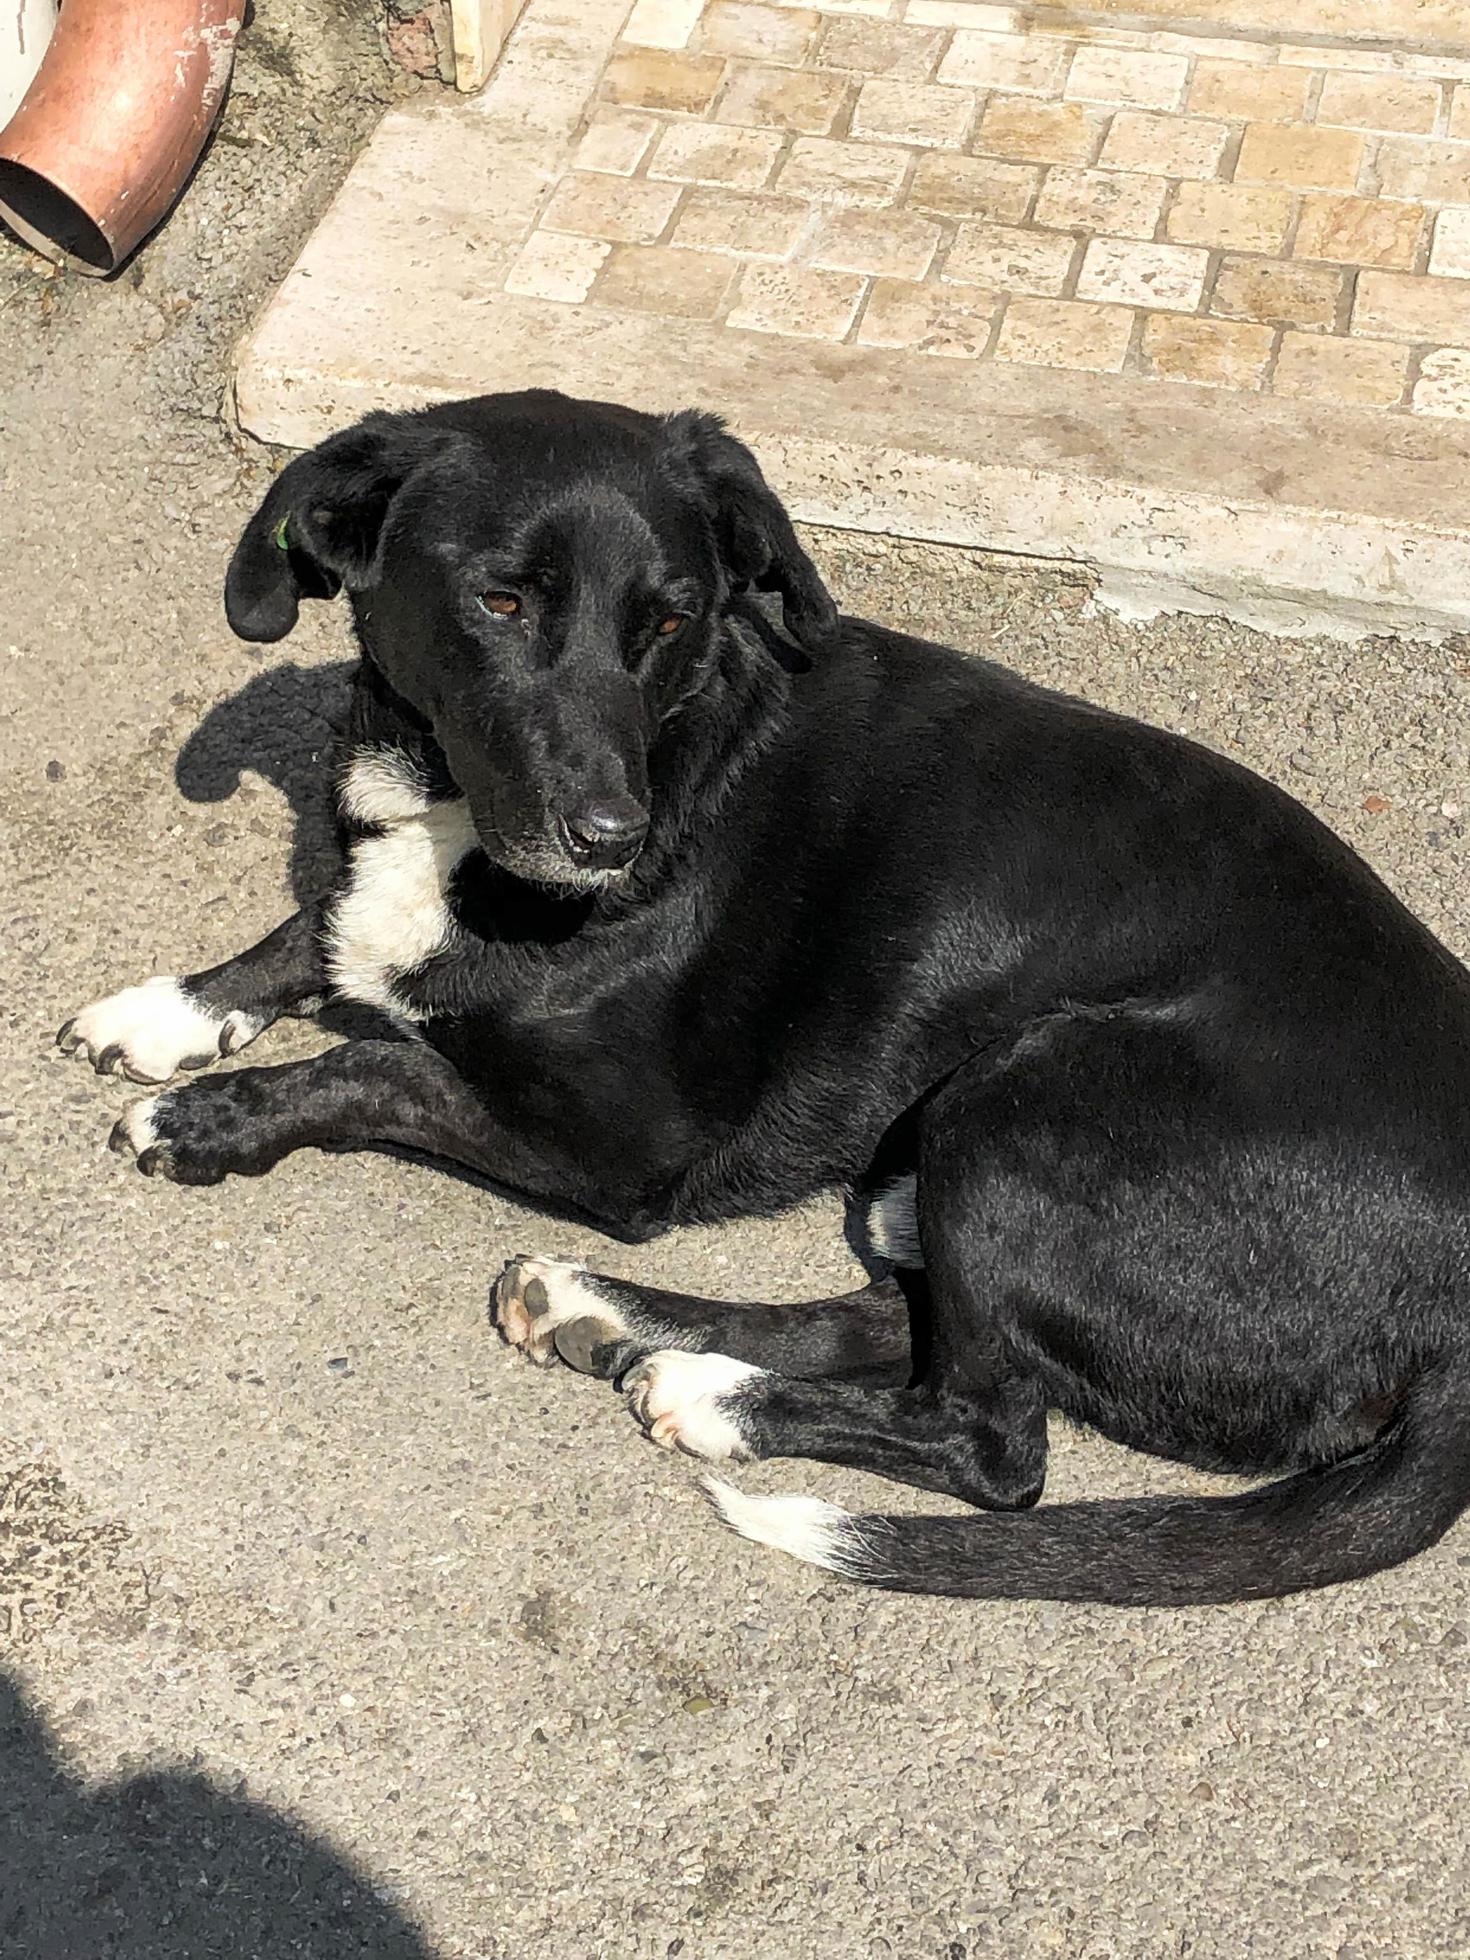 hermoso perro mestizo sin hogar negro con ojos tristes tirados en el suelo,  descansando 14376316 Foto de stock en Vecteezy